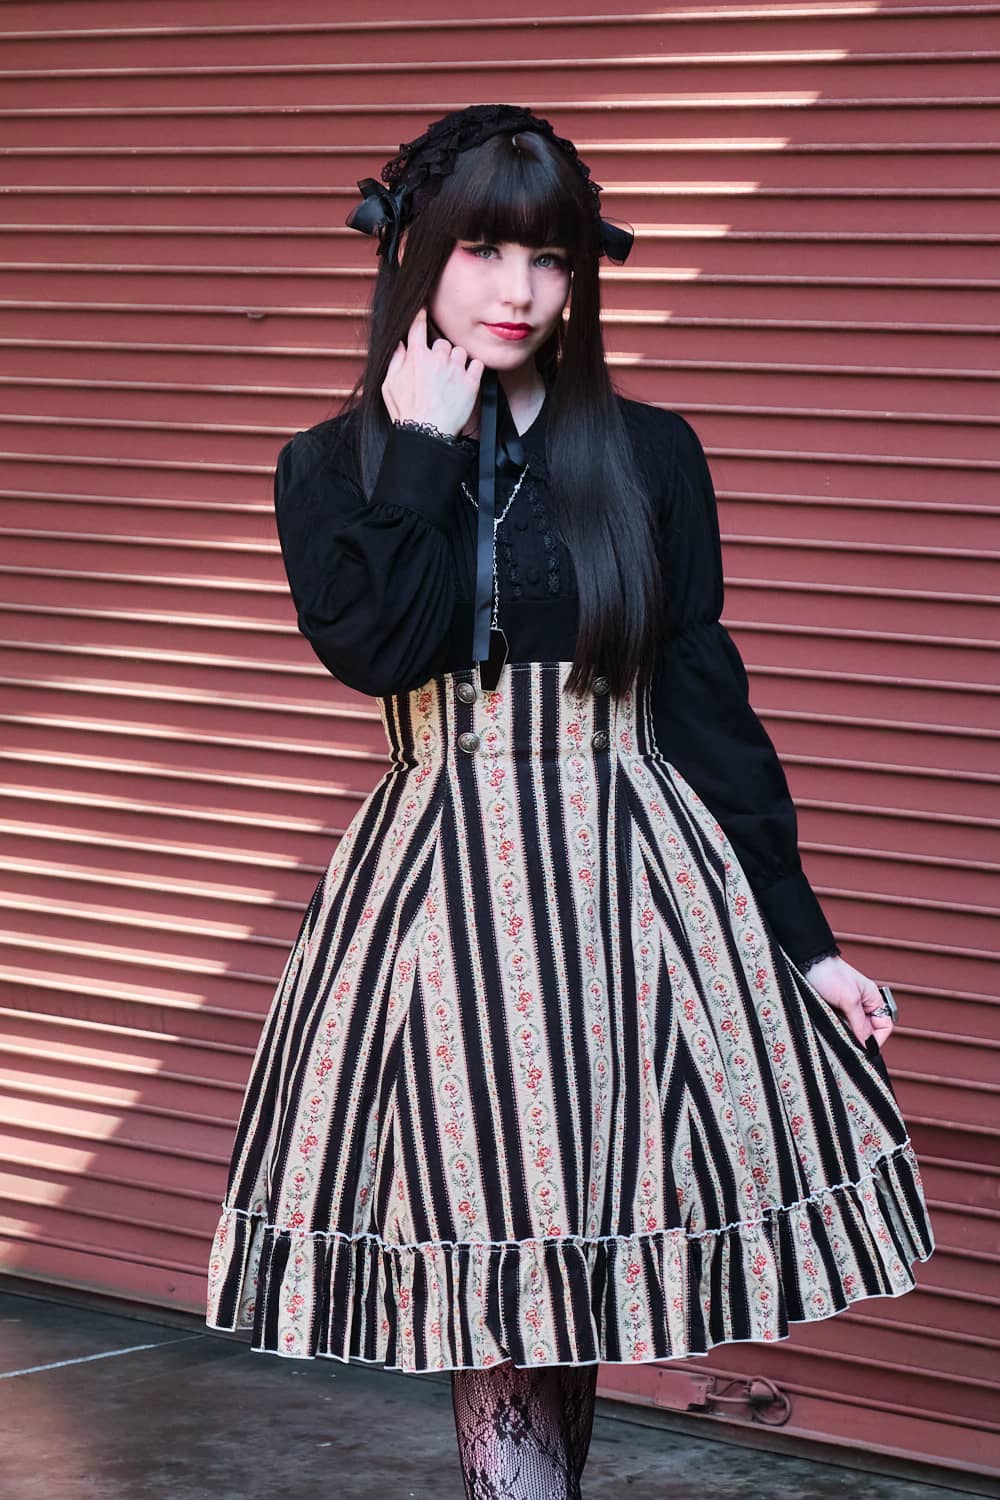 Atelier Pierrot classic lolita model wearing black long sleeve cutsew and floral pattern high waist skirt - portrait.